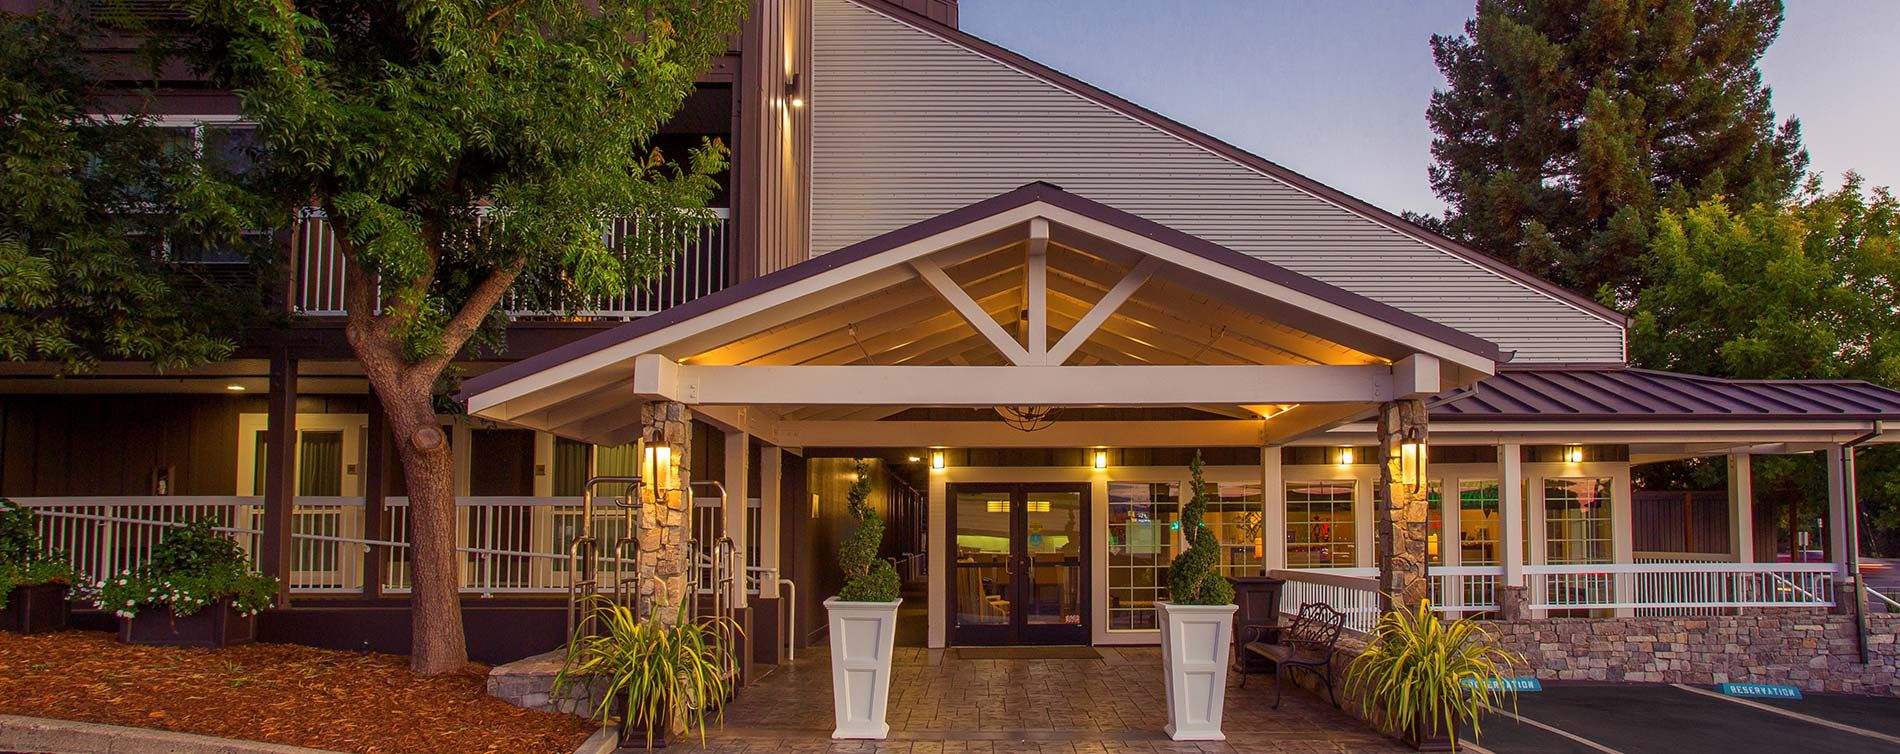 Best Western Plus Inn At The Vines Napa California Main Image